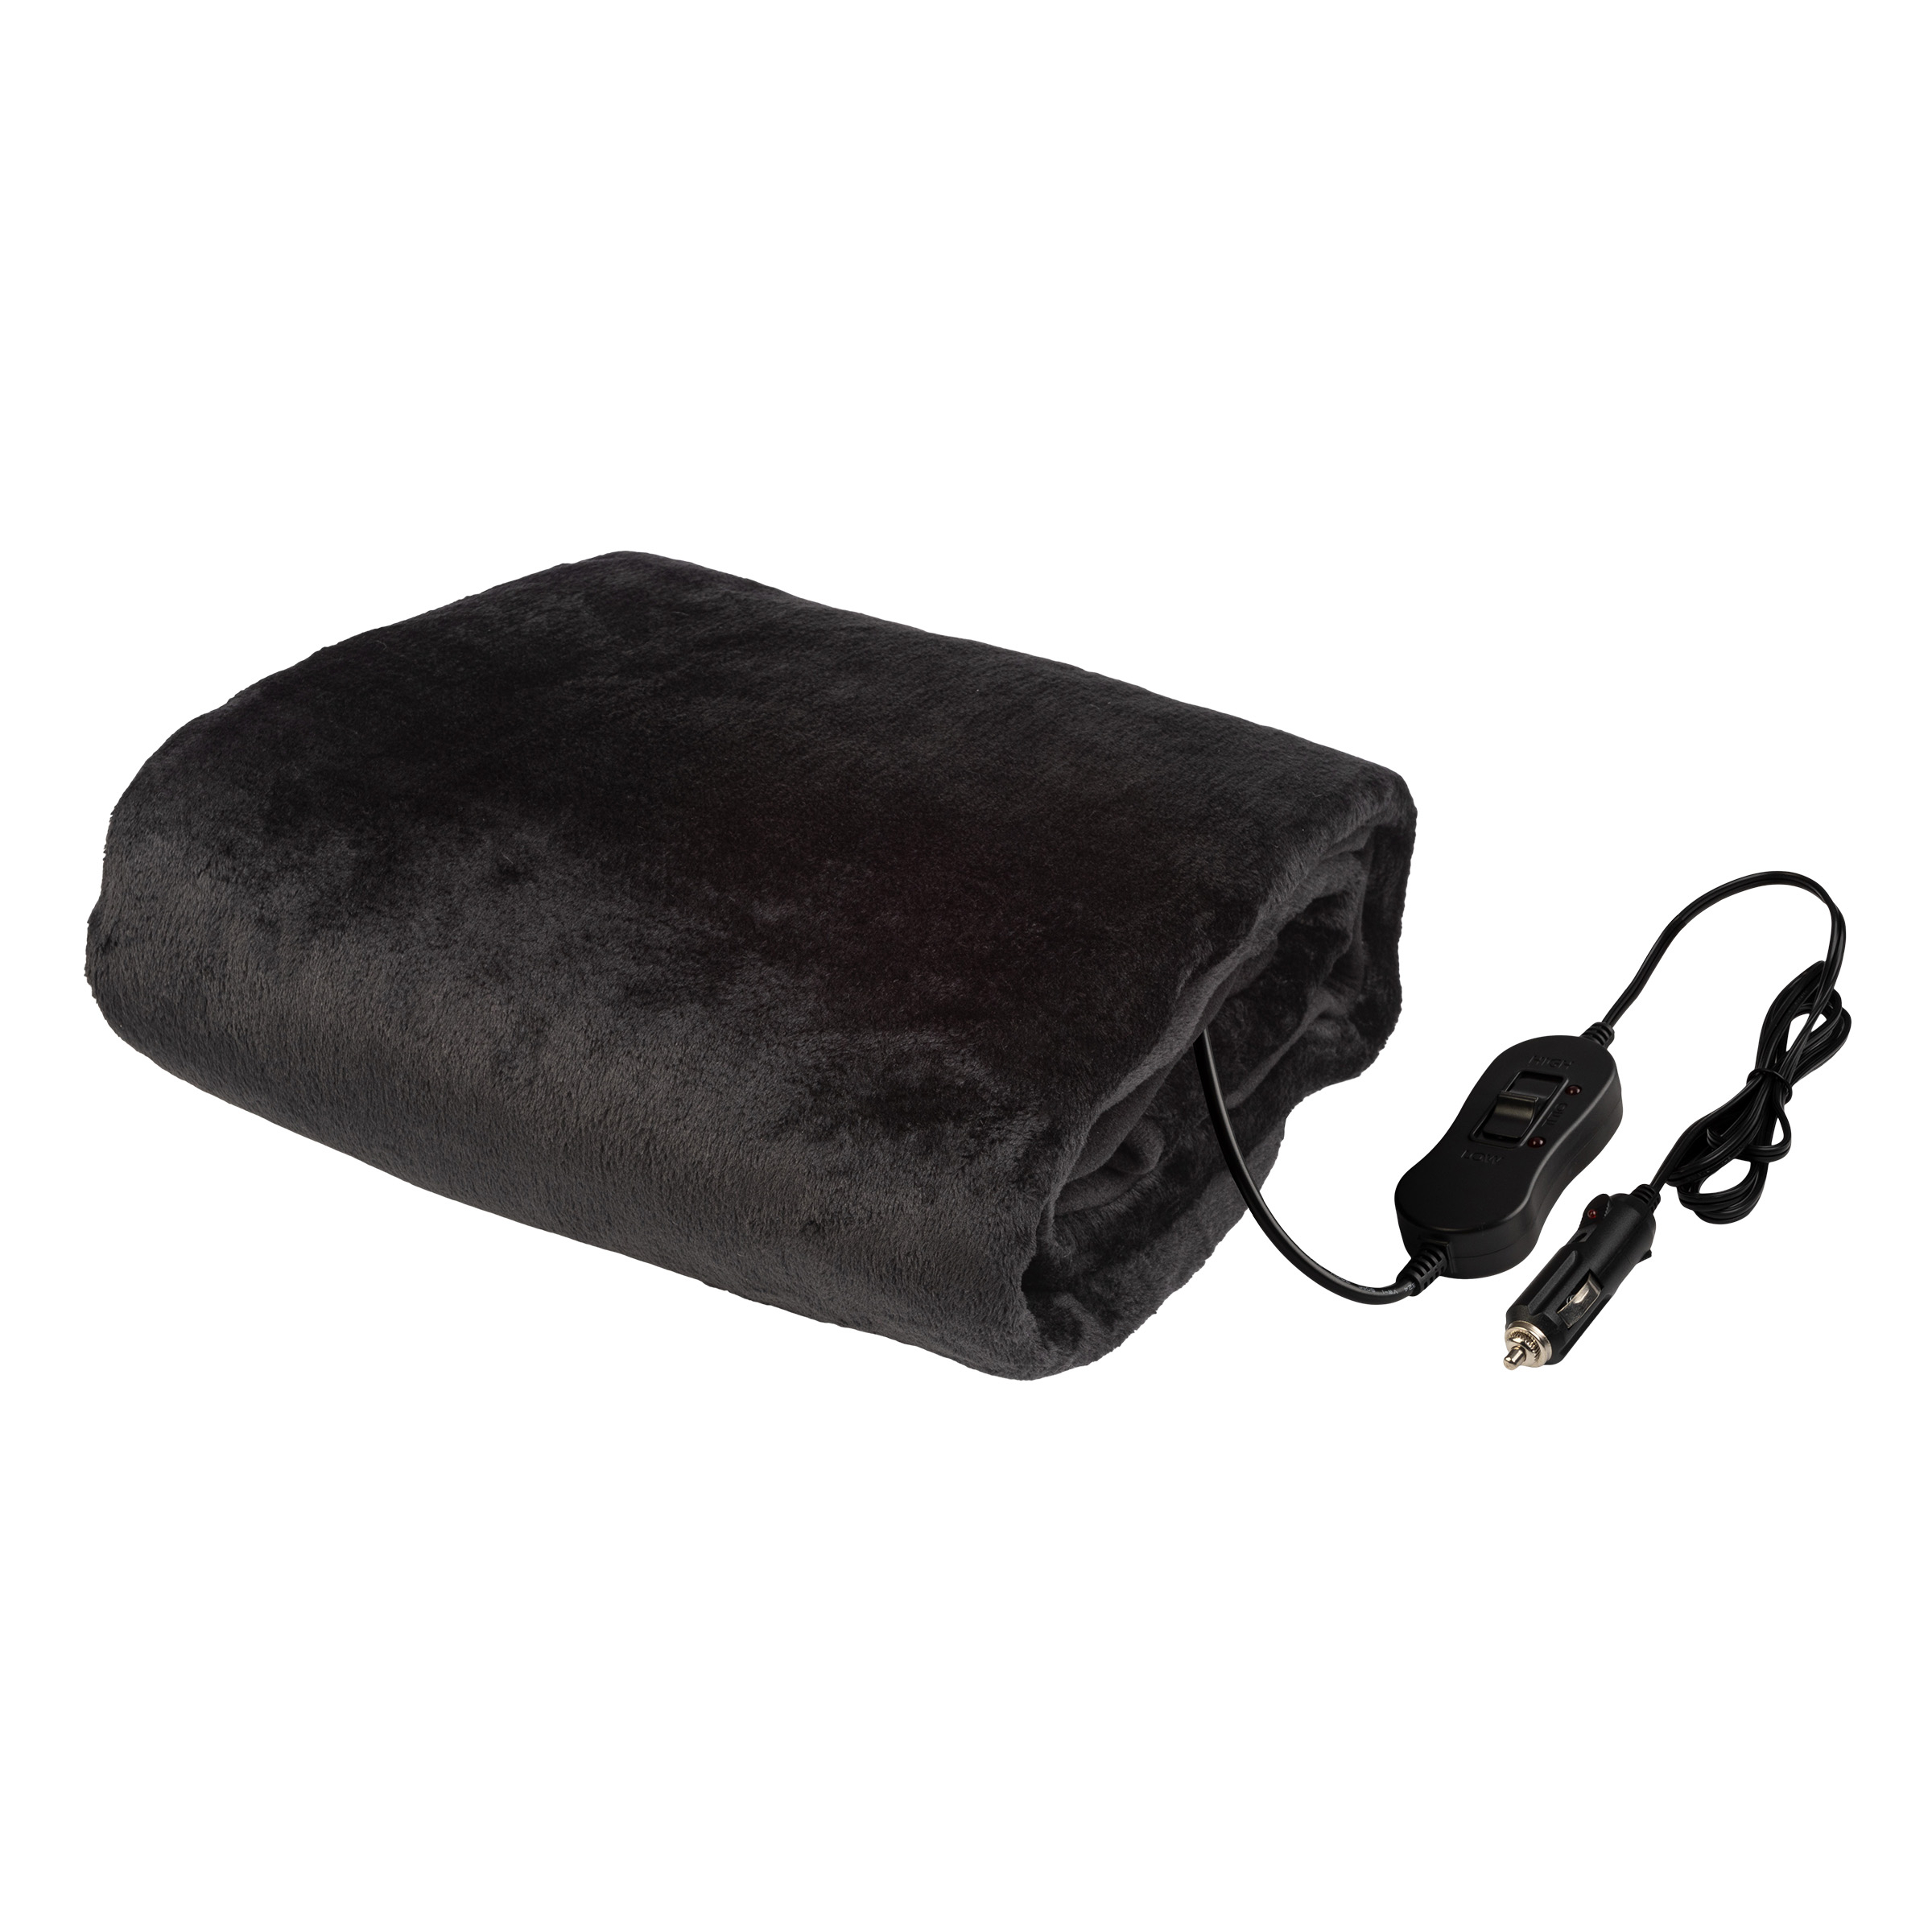 Heated Blanket Portable 12V Electric Travel Blanket For Car, Truck, Or RV - Black